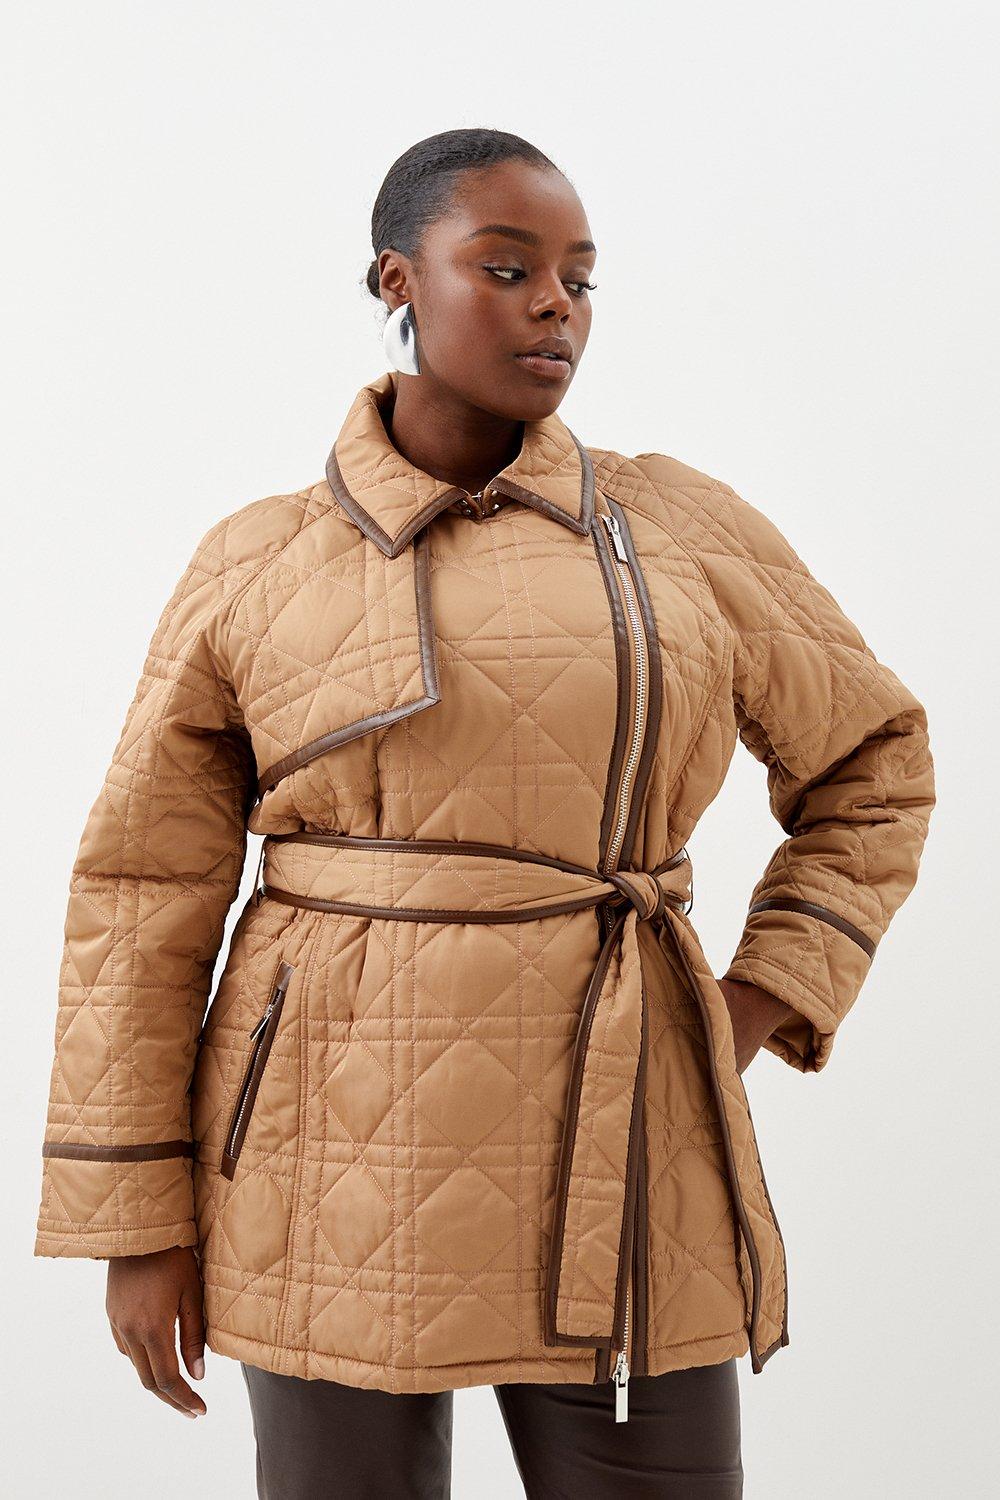 Plus Size Winter Coats & Jackets